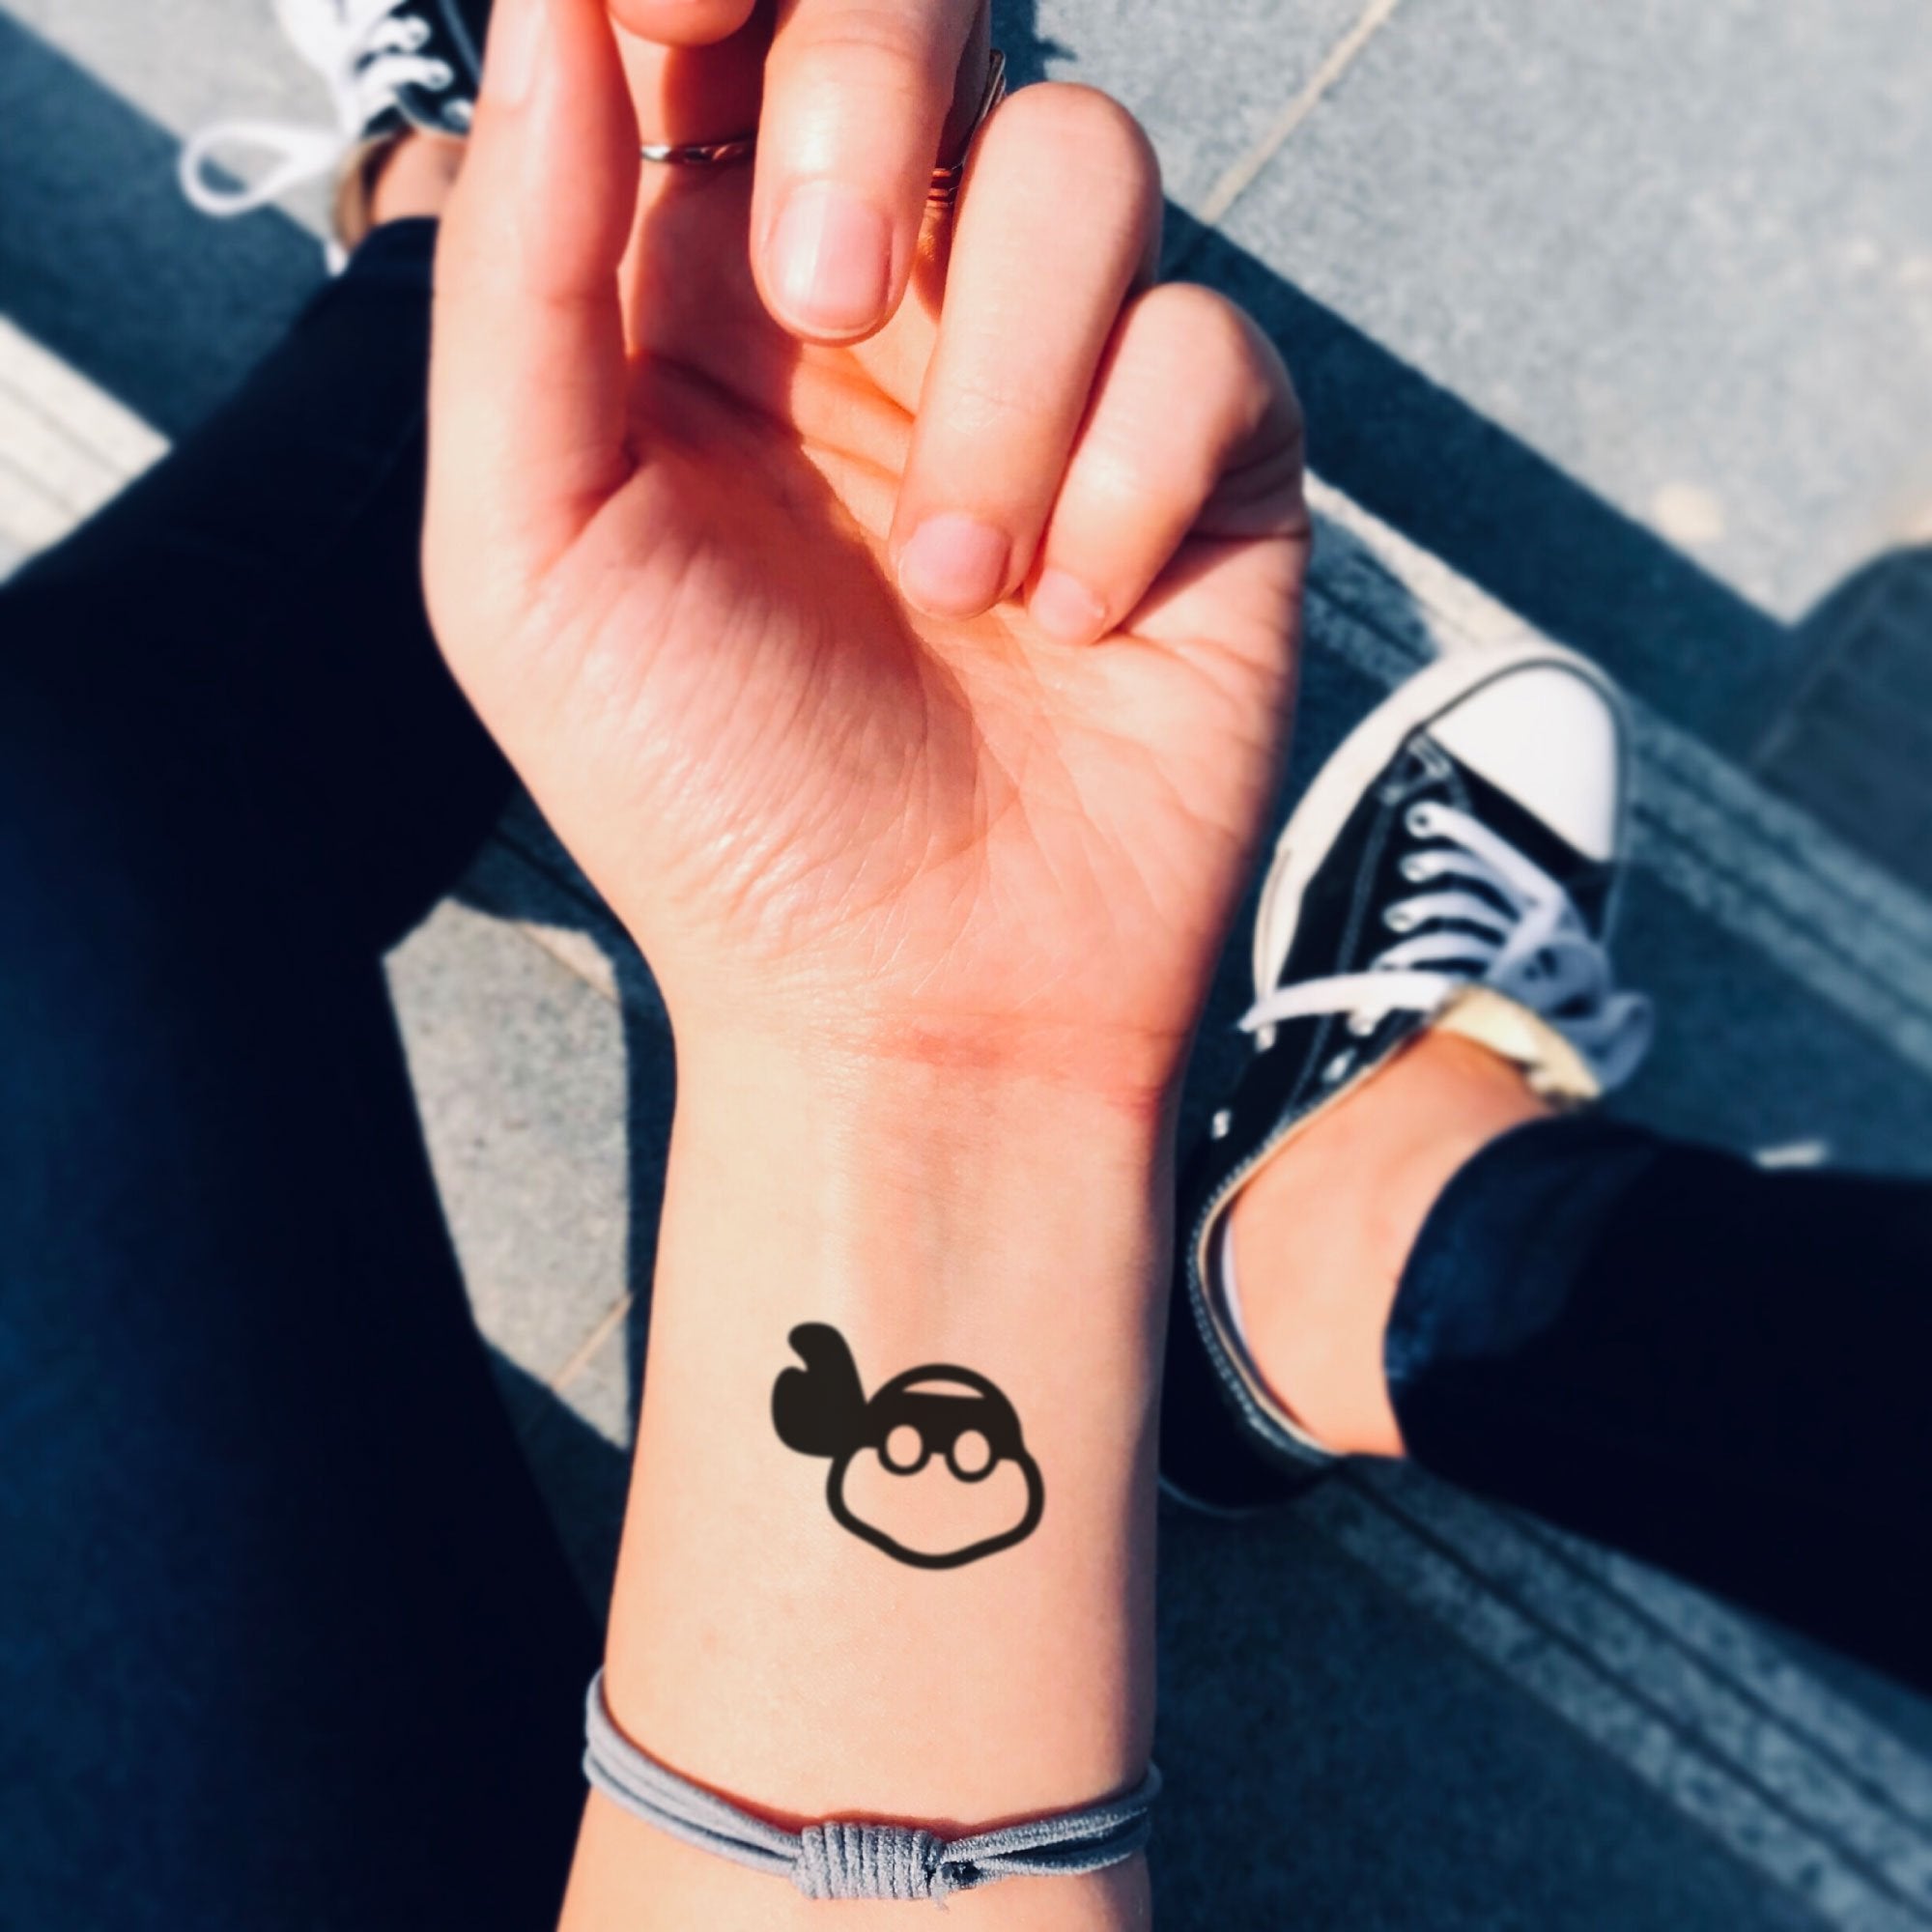 Tired Farm Wife on Twitter Inkedmag My favorite ninja turtle tattoo is  mine that one is pretty awesome too httpstcoQ9hWpMqGKt  Twitter